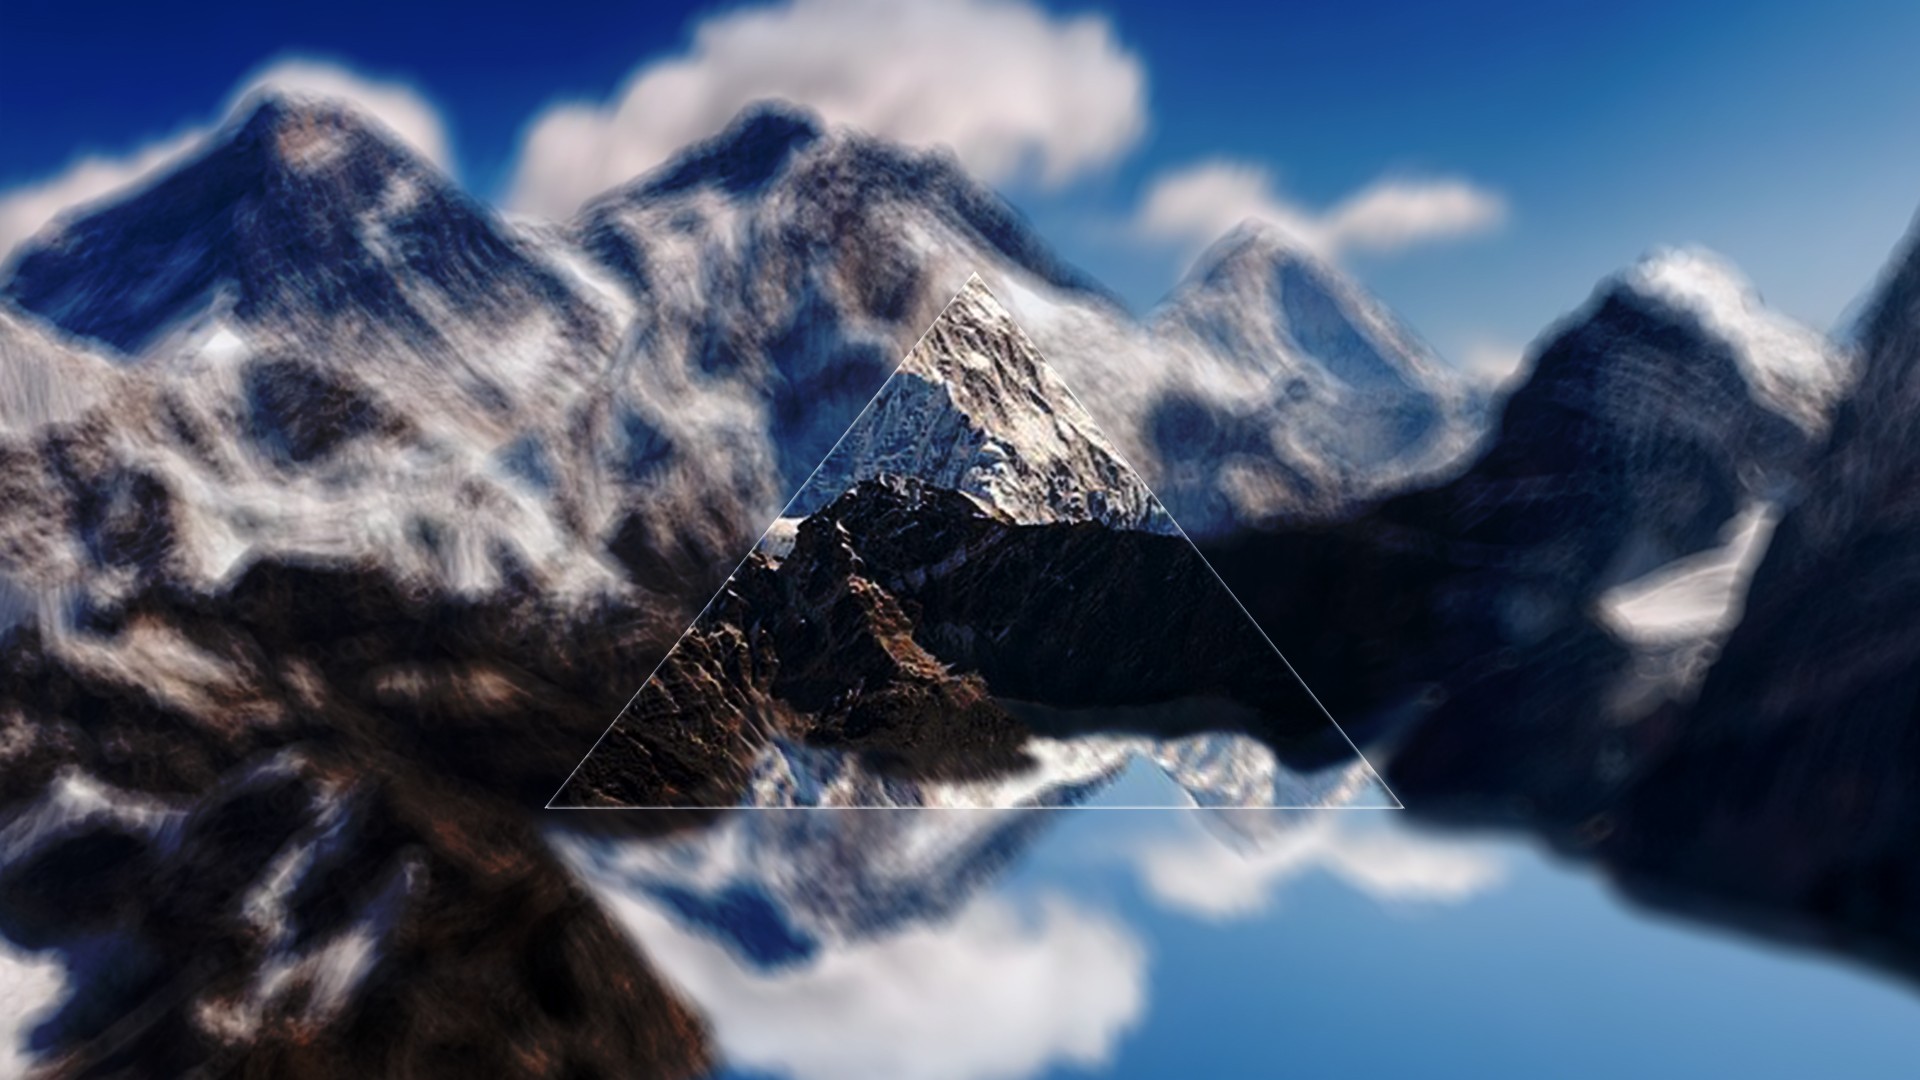 Landscape Digital Art Triangle Mount Everest Himalayas Mountains 1920x1080